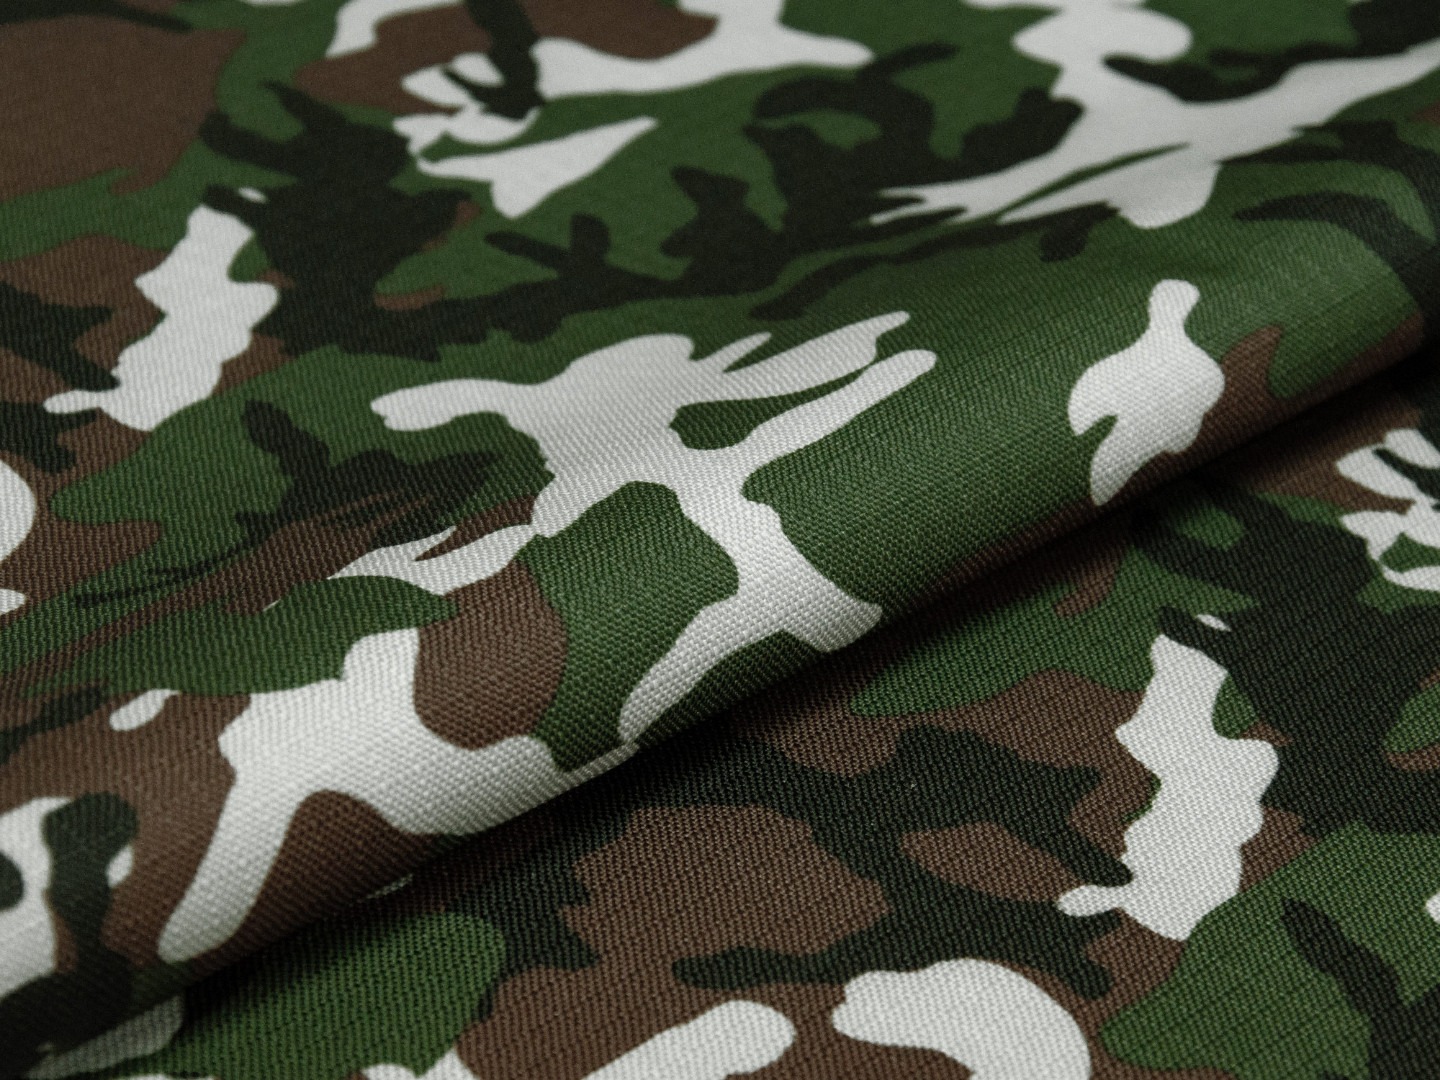 Coated Fabrics for Defense